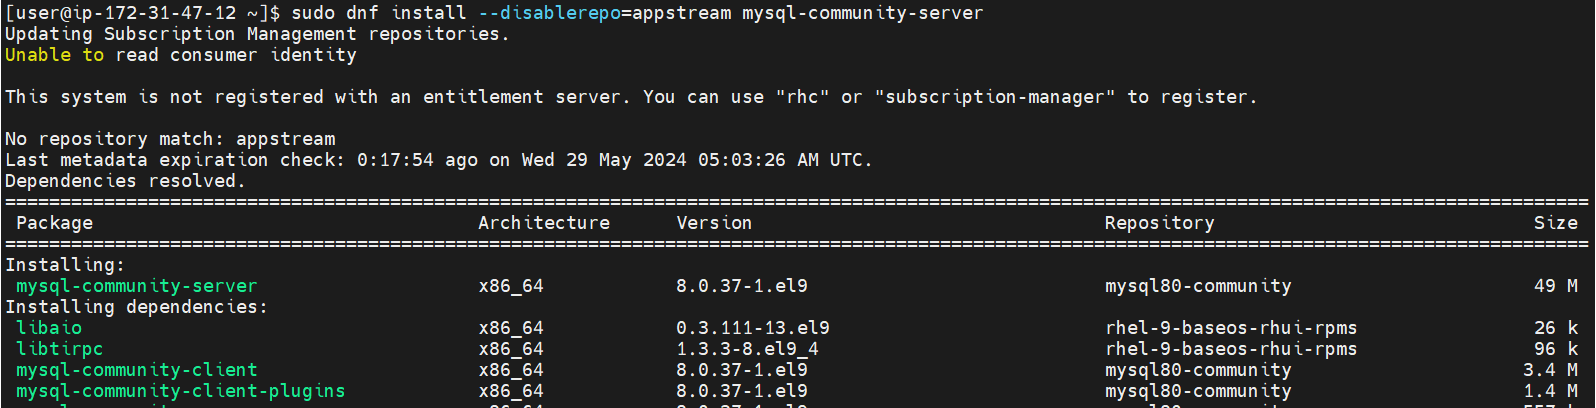 MySQL 8.0 Community Edition installation prompt on AlmaLinux